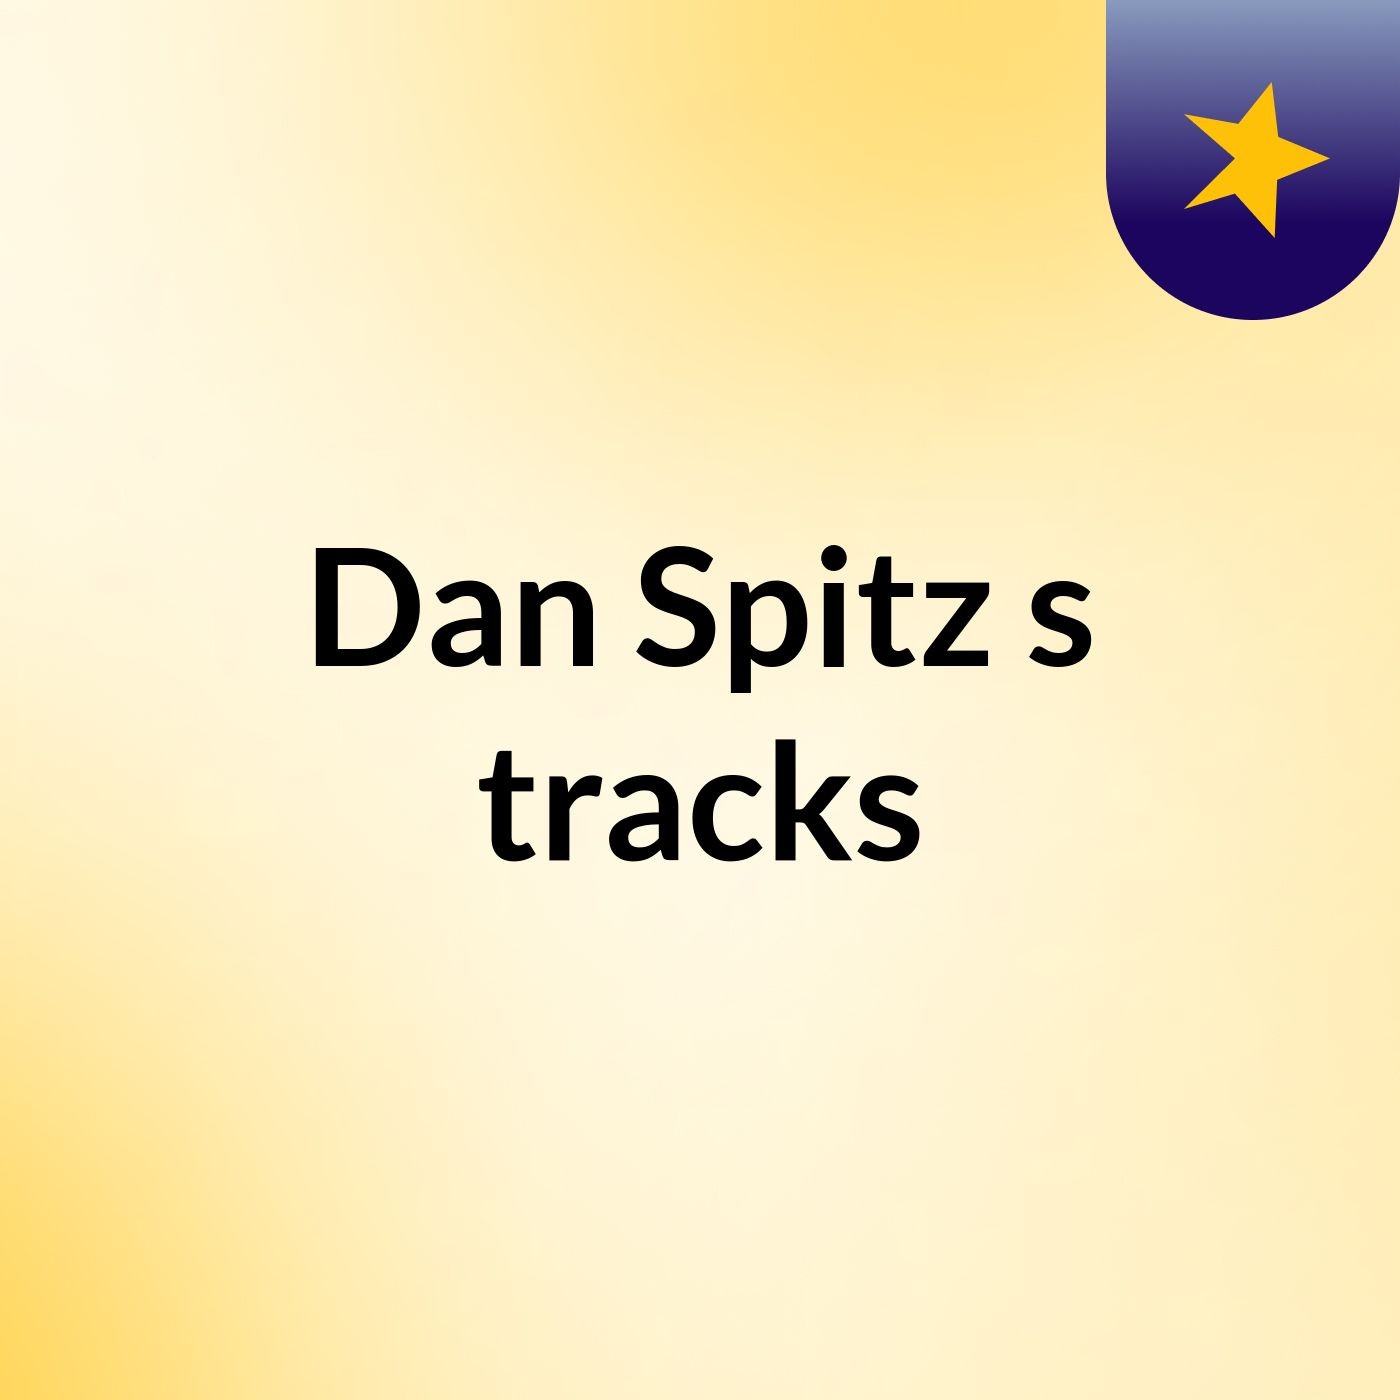 Dan Spitz's tracks